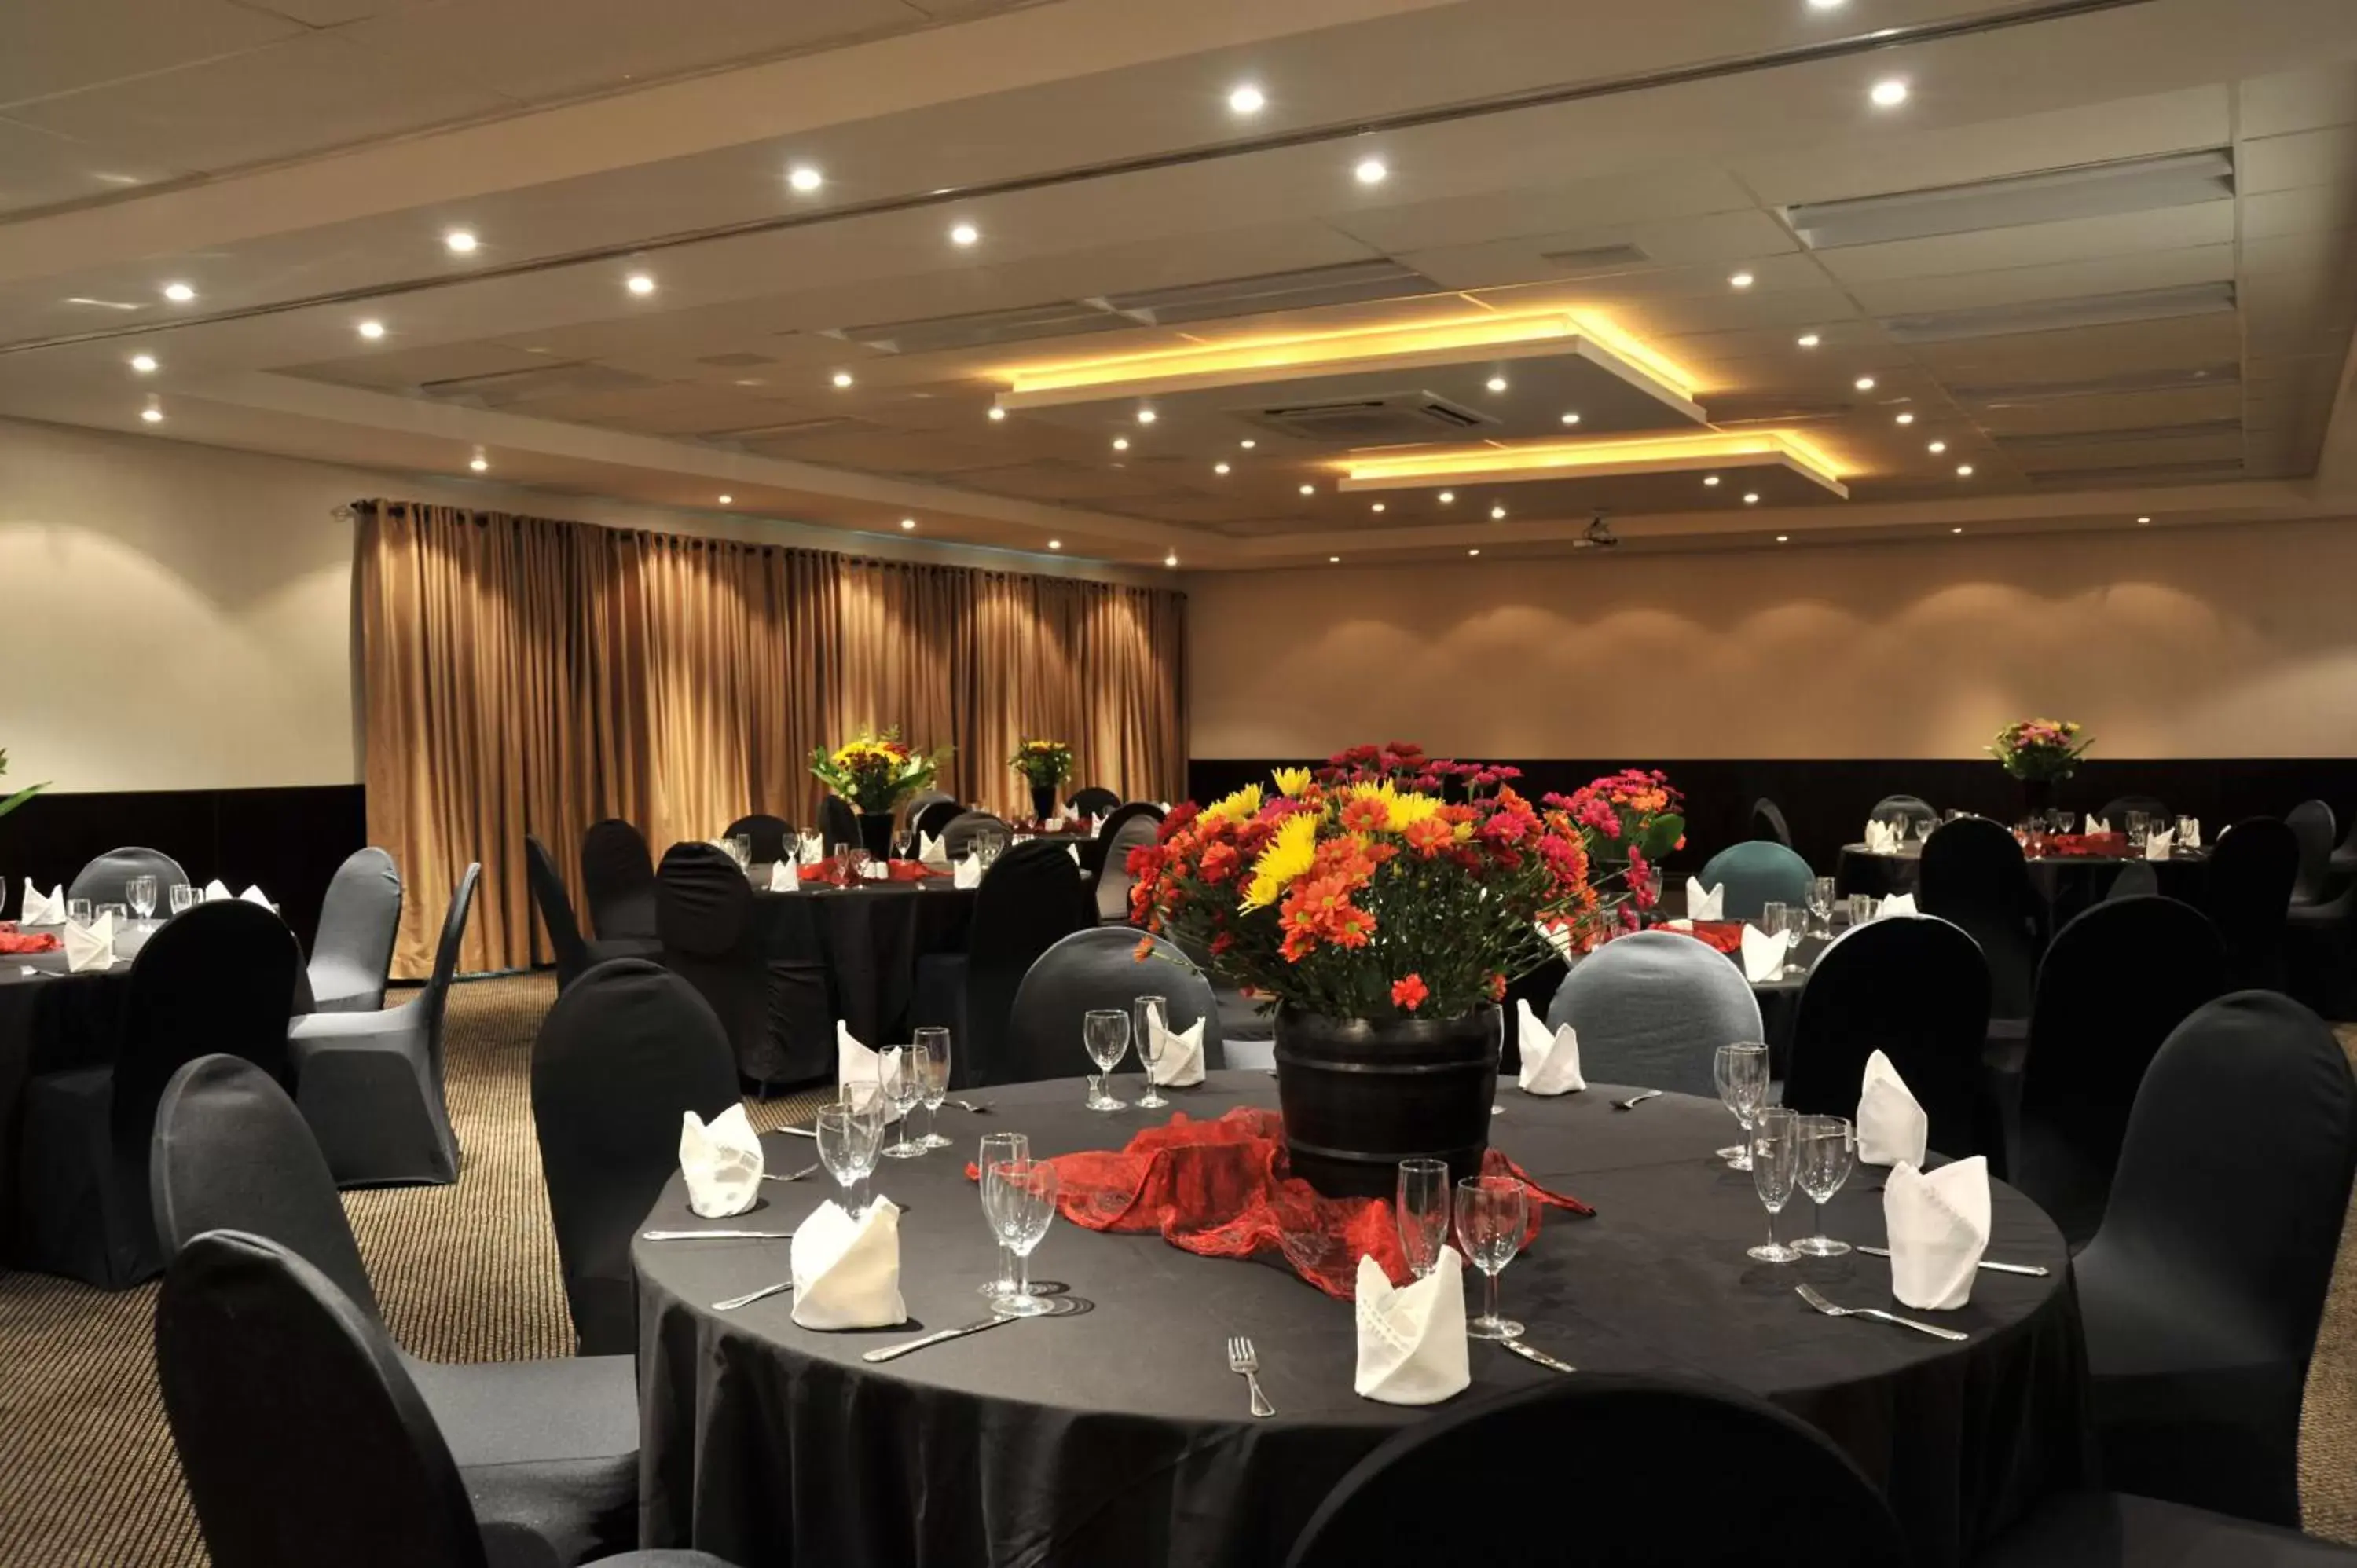 Banquet/Function facilities, Banquet Facilities in Safari Hotel & Convention Centre